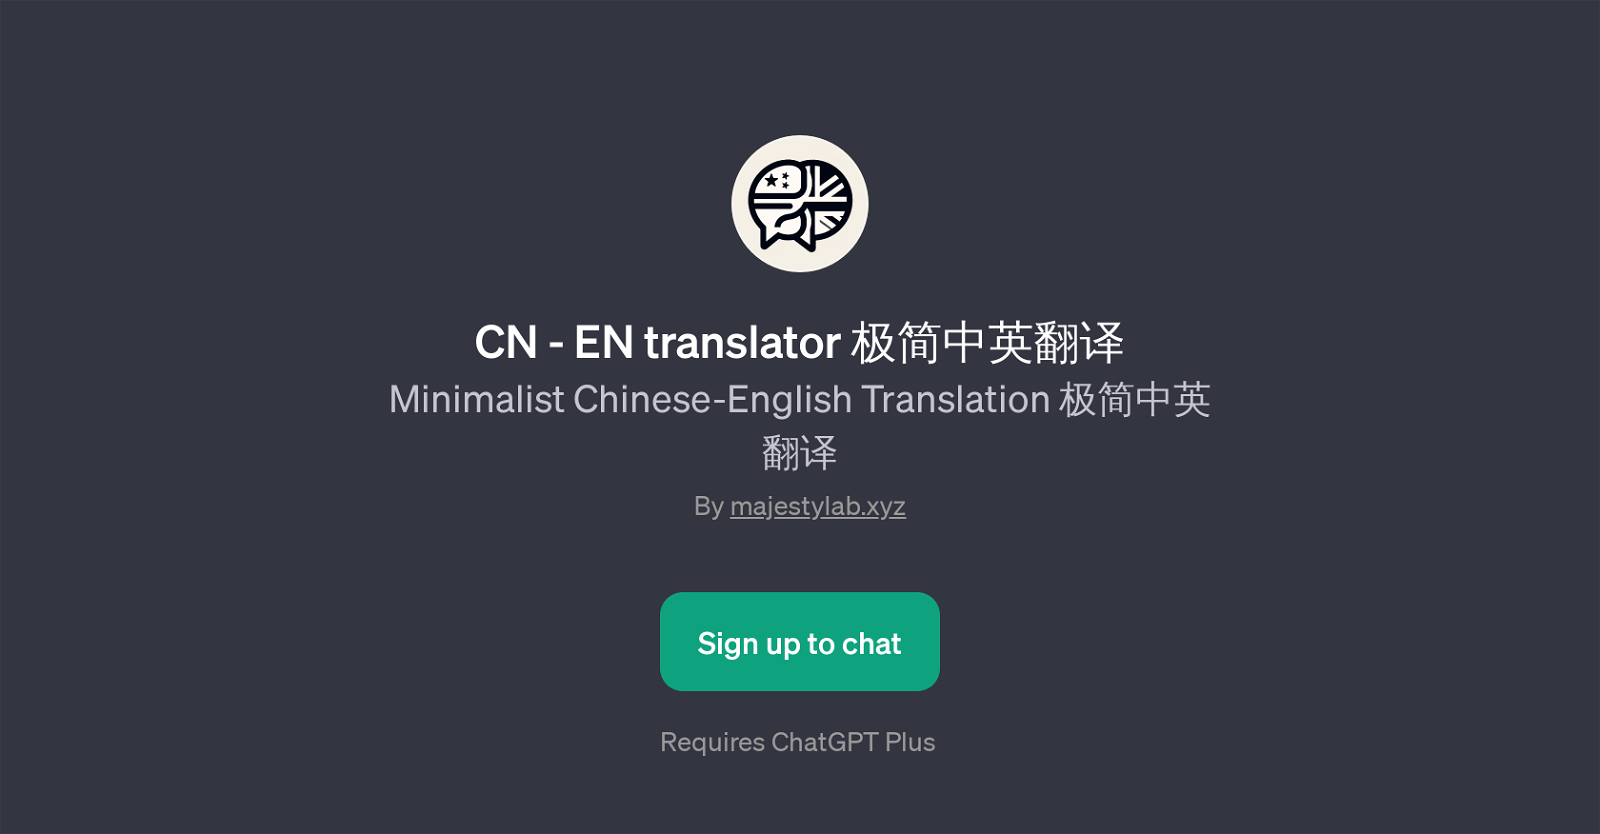 CN - EN translator website